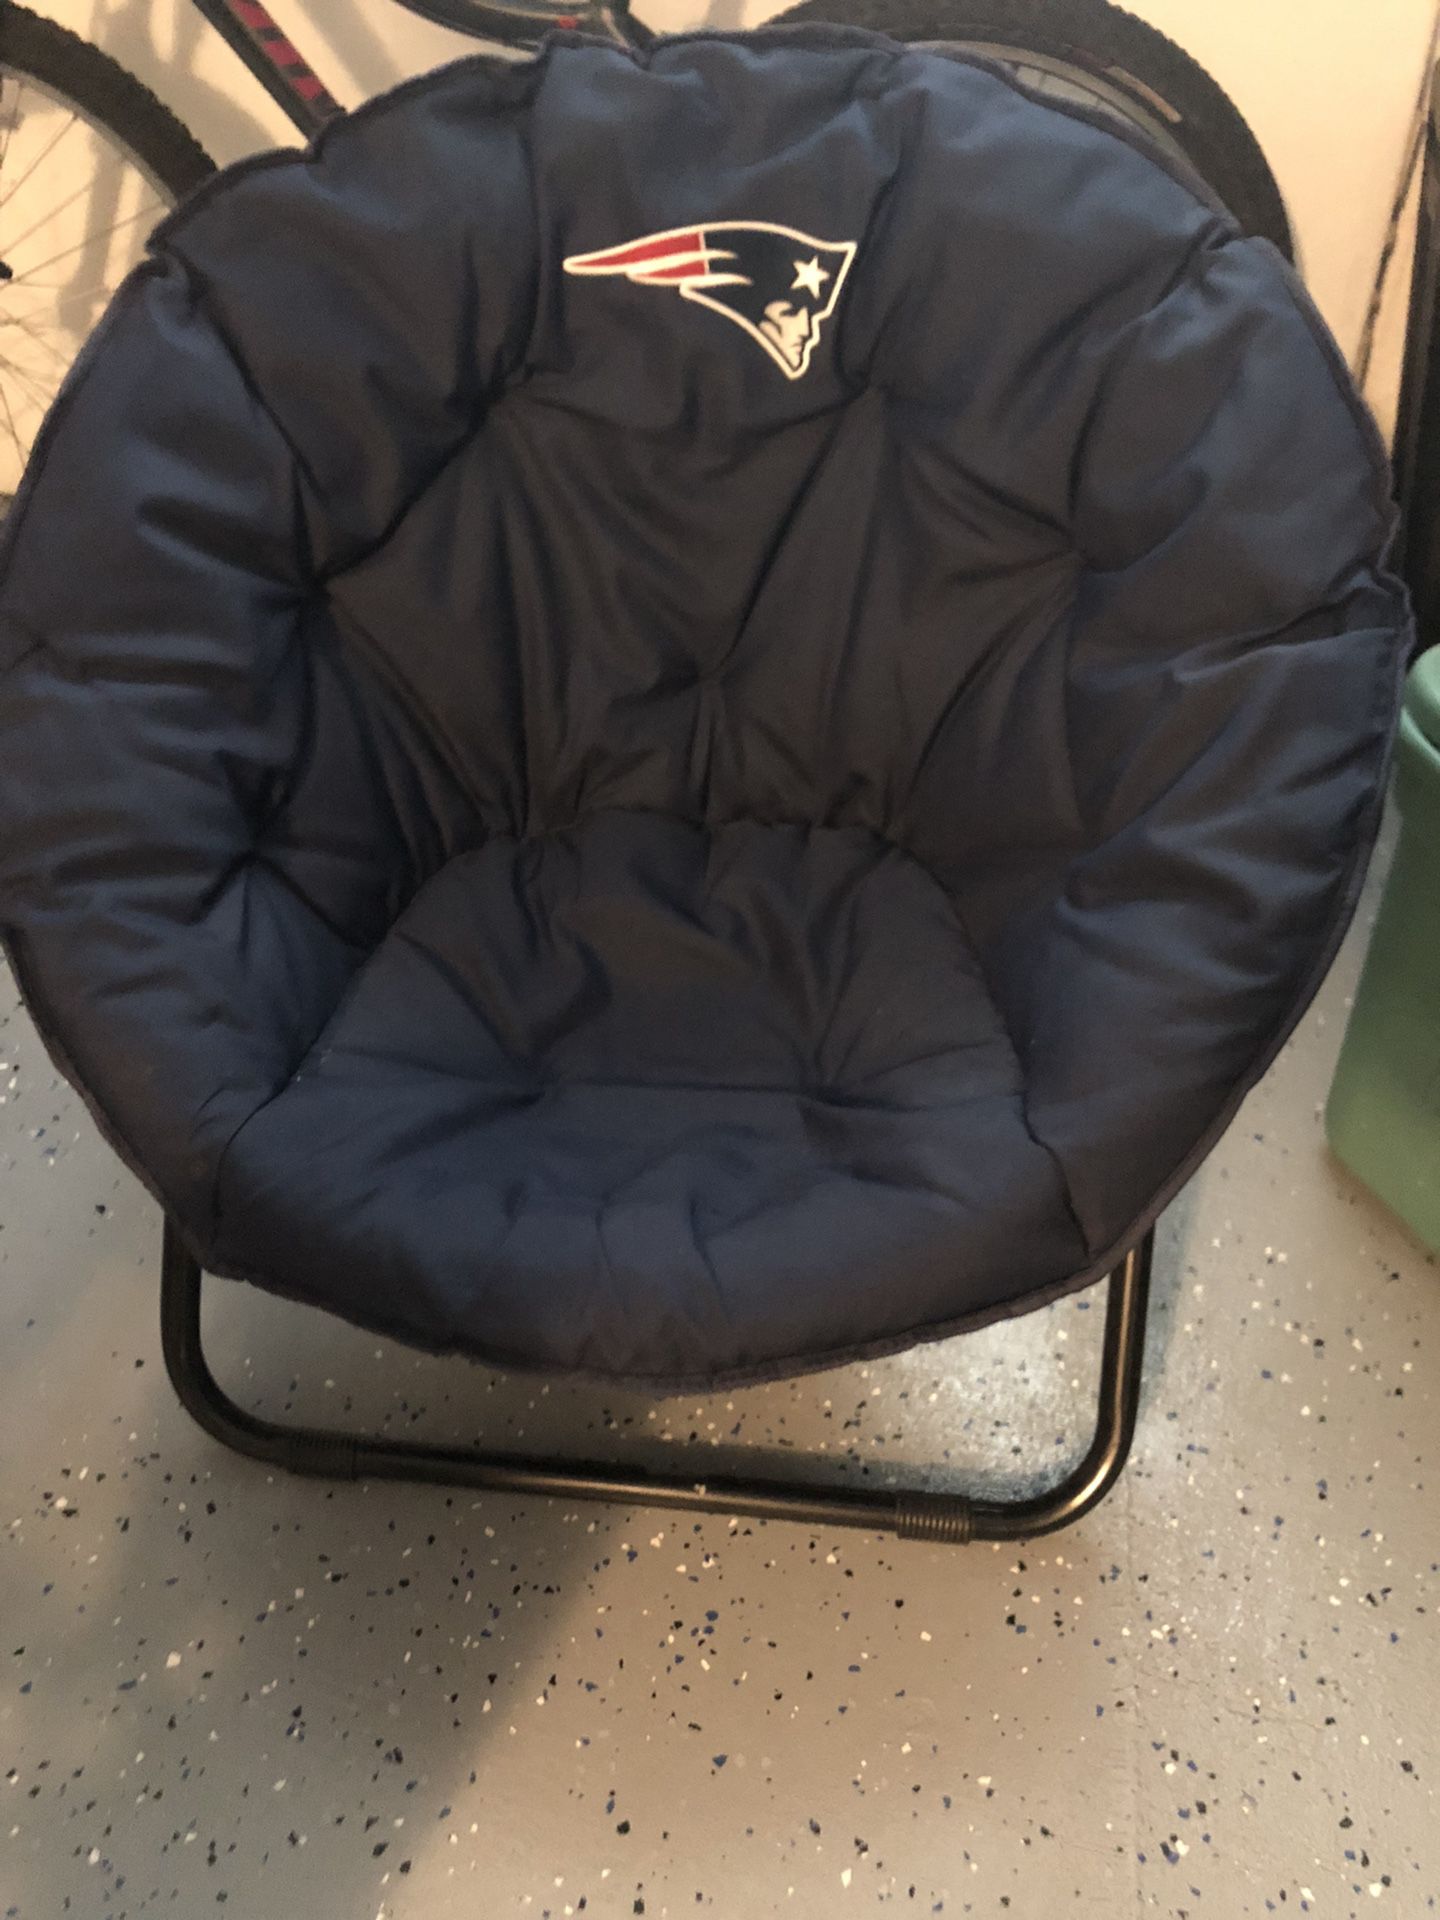 Patriots chair